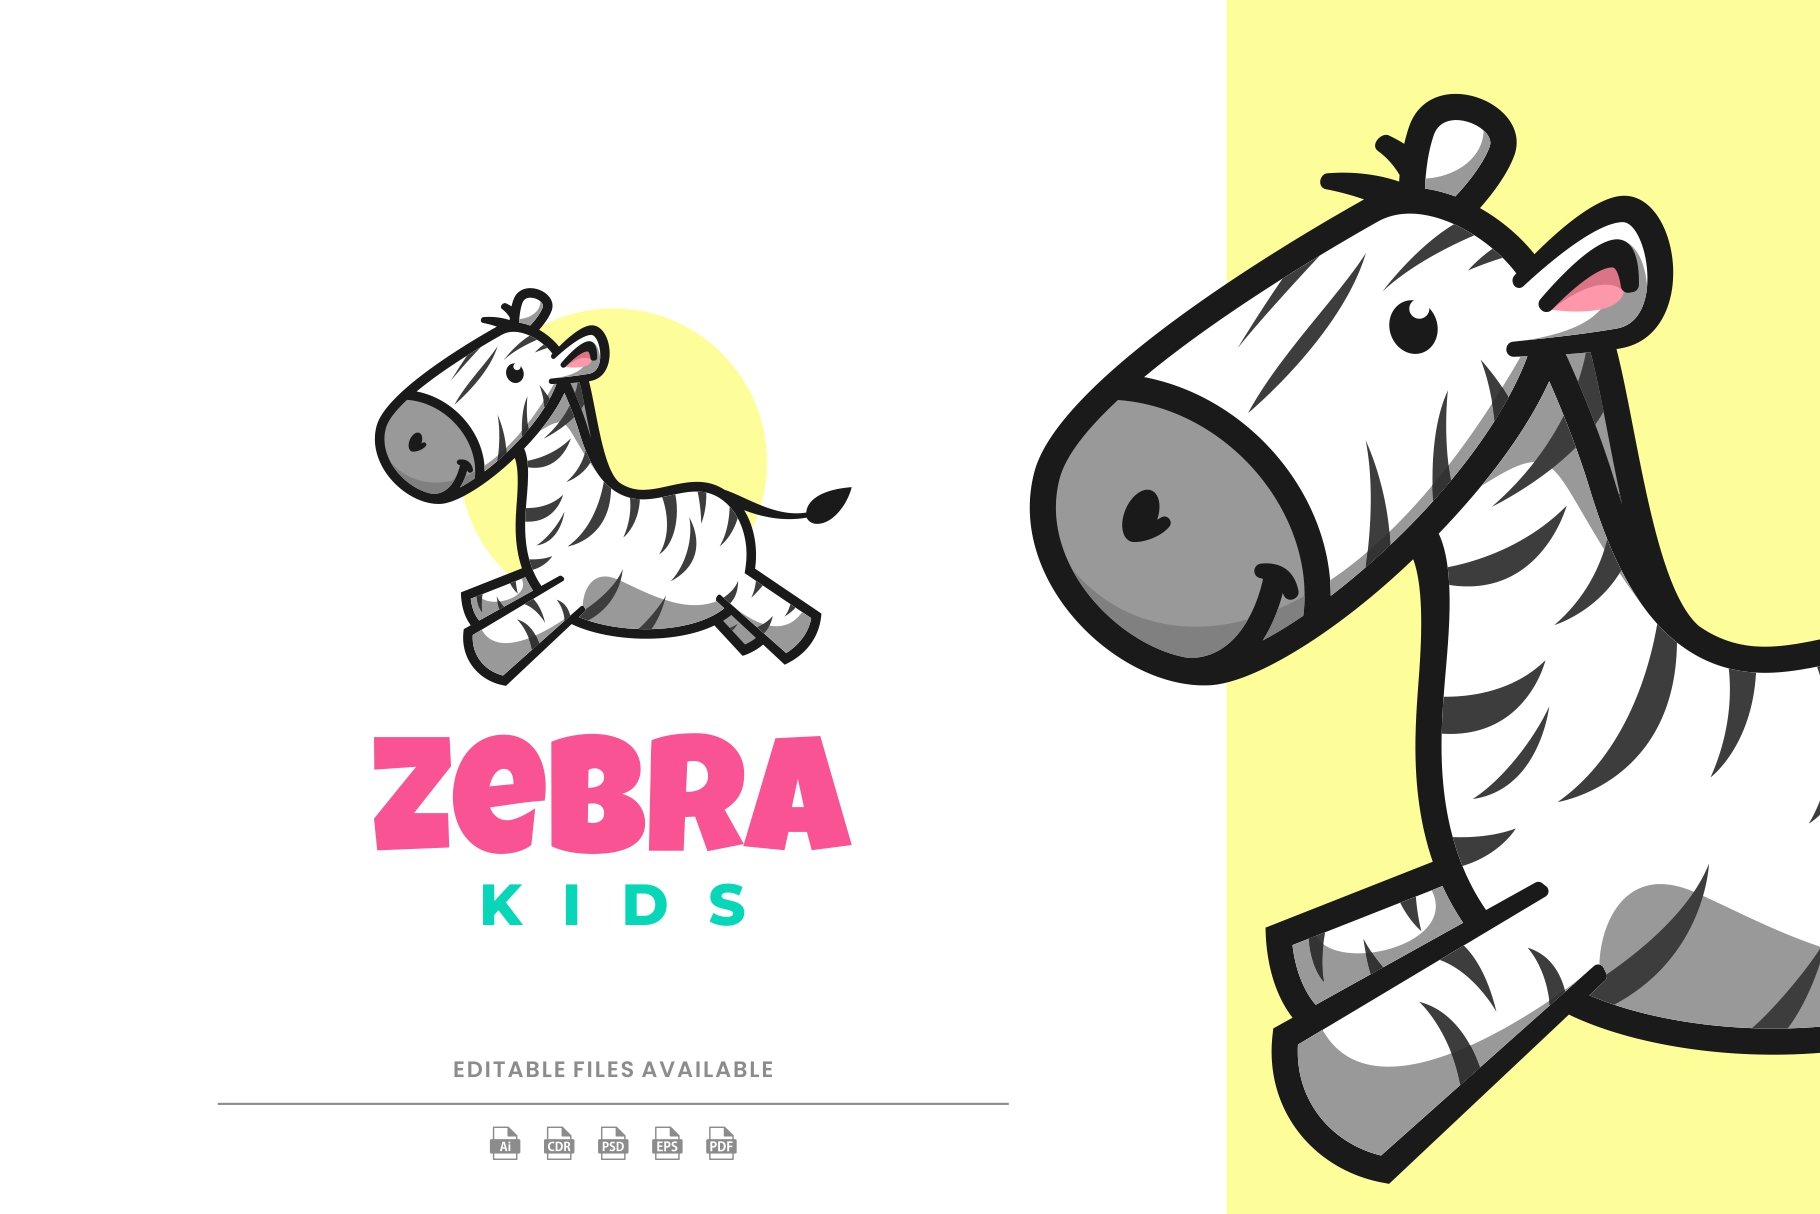 Zebra Kids Gradient Colorful Logo cover image.